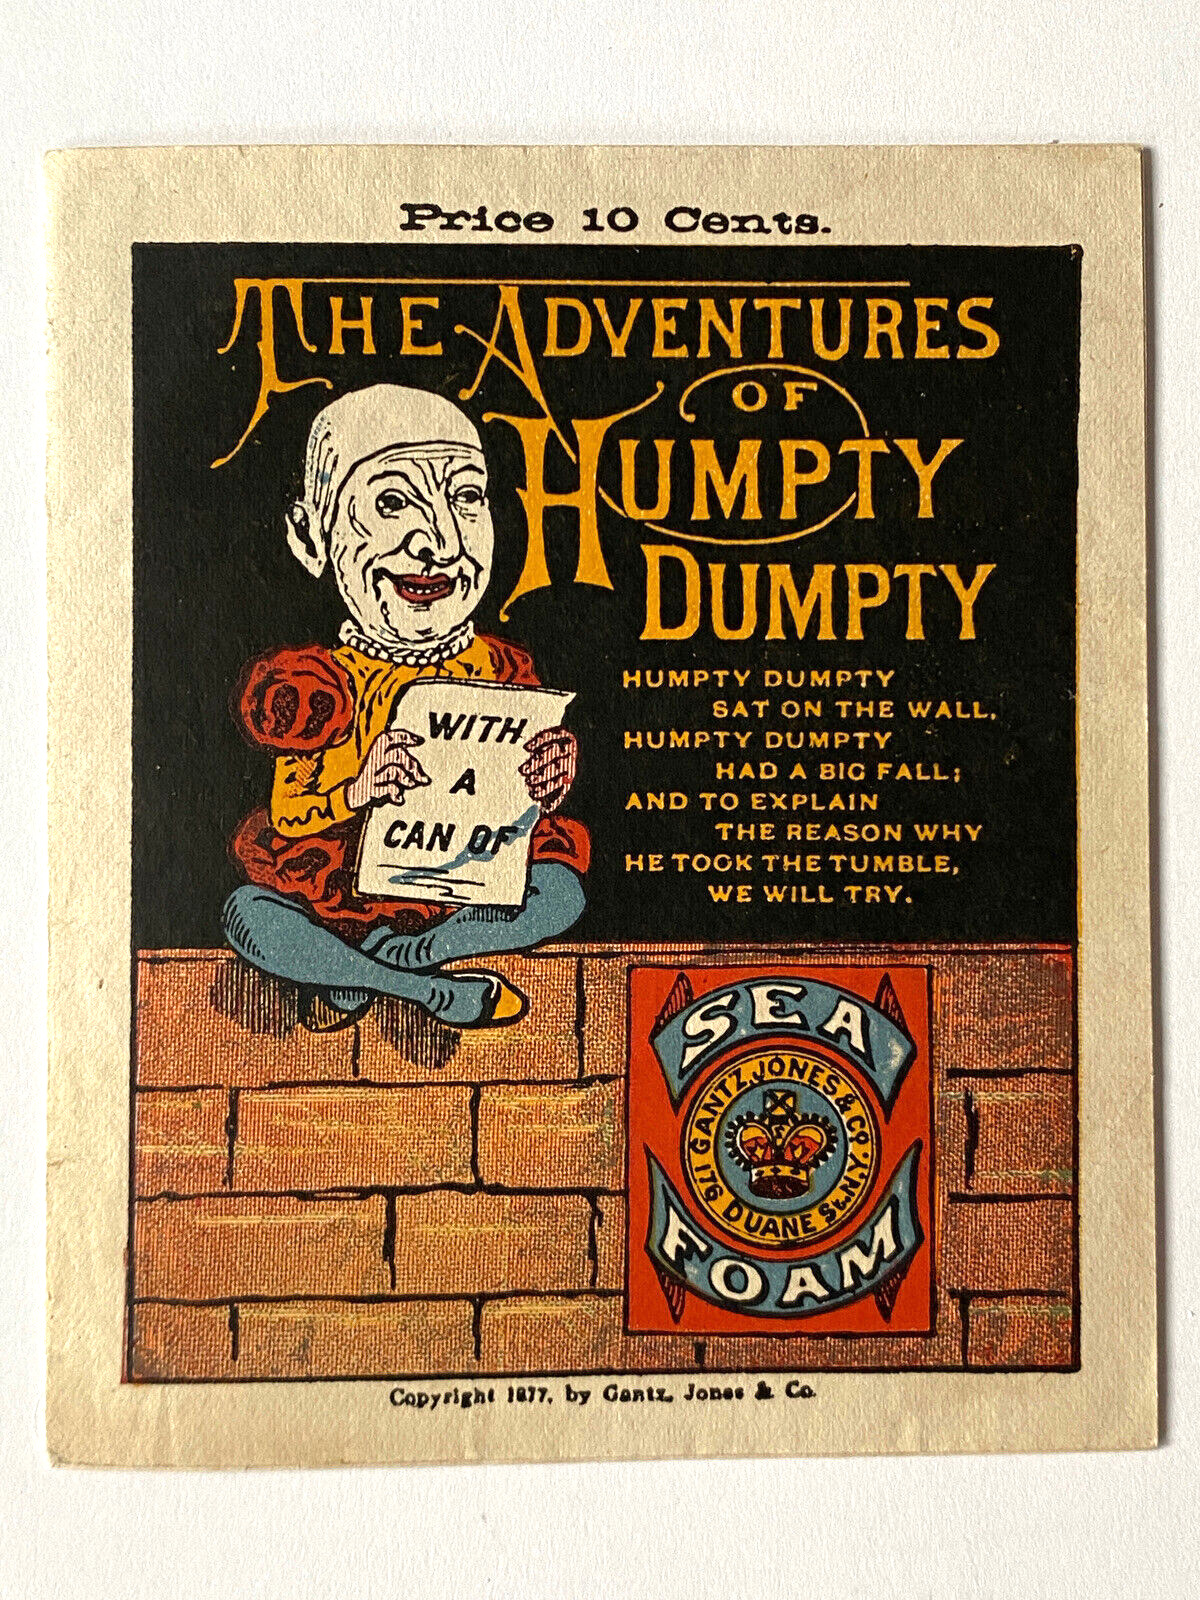 RARE 1877 TRADE CARD FOR SEA FOAM BAKING POWDER ADVENTURES OF HUMPTY DUMPTY